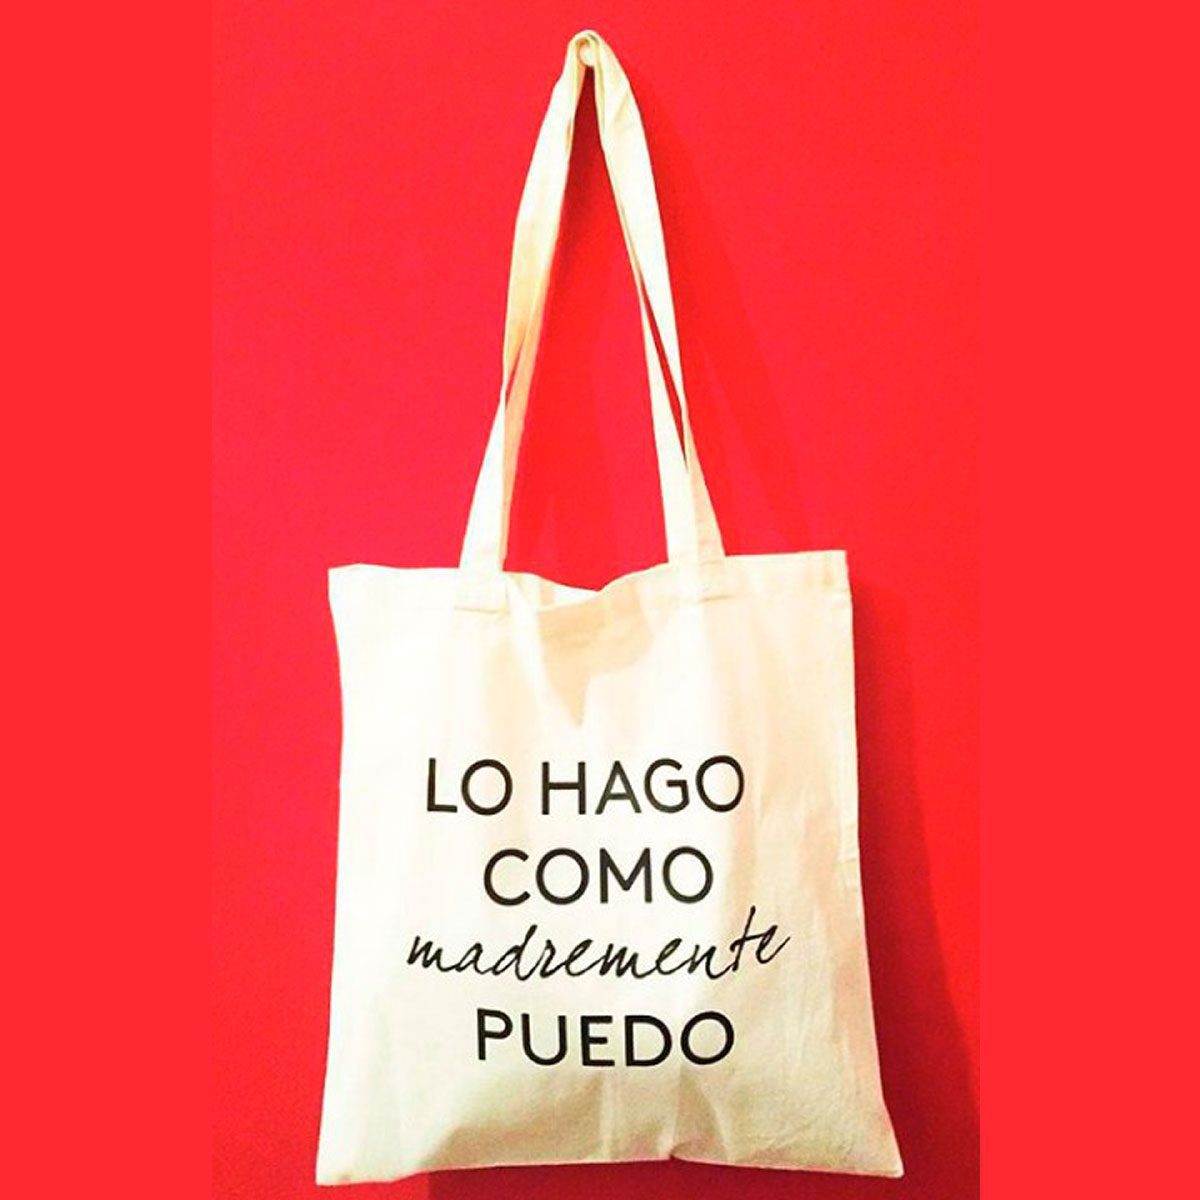 https://www.camisetasecologicas.es/wp-content/uploads/tote-bag-algodon-organico-madremente.jpg